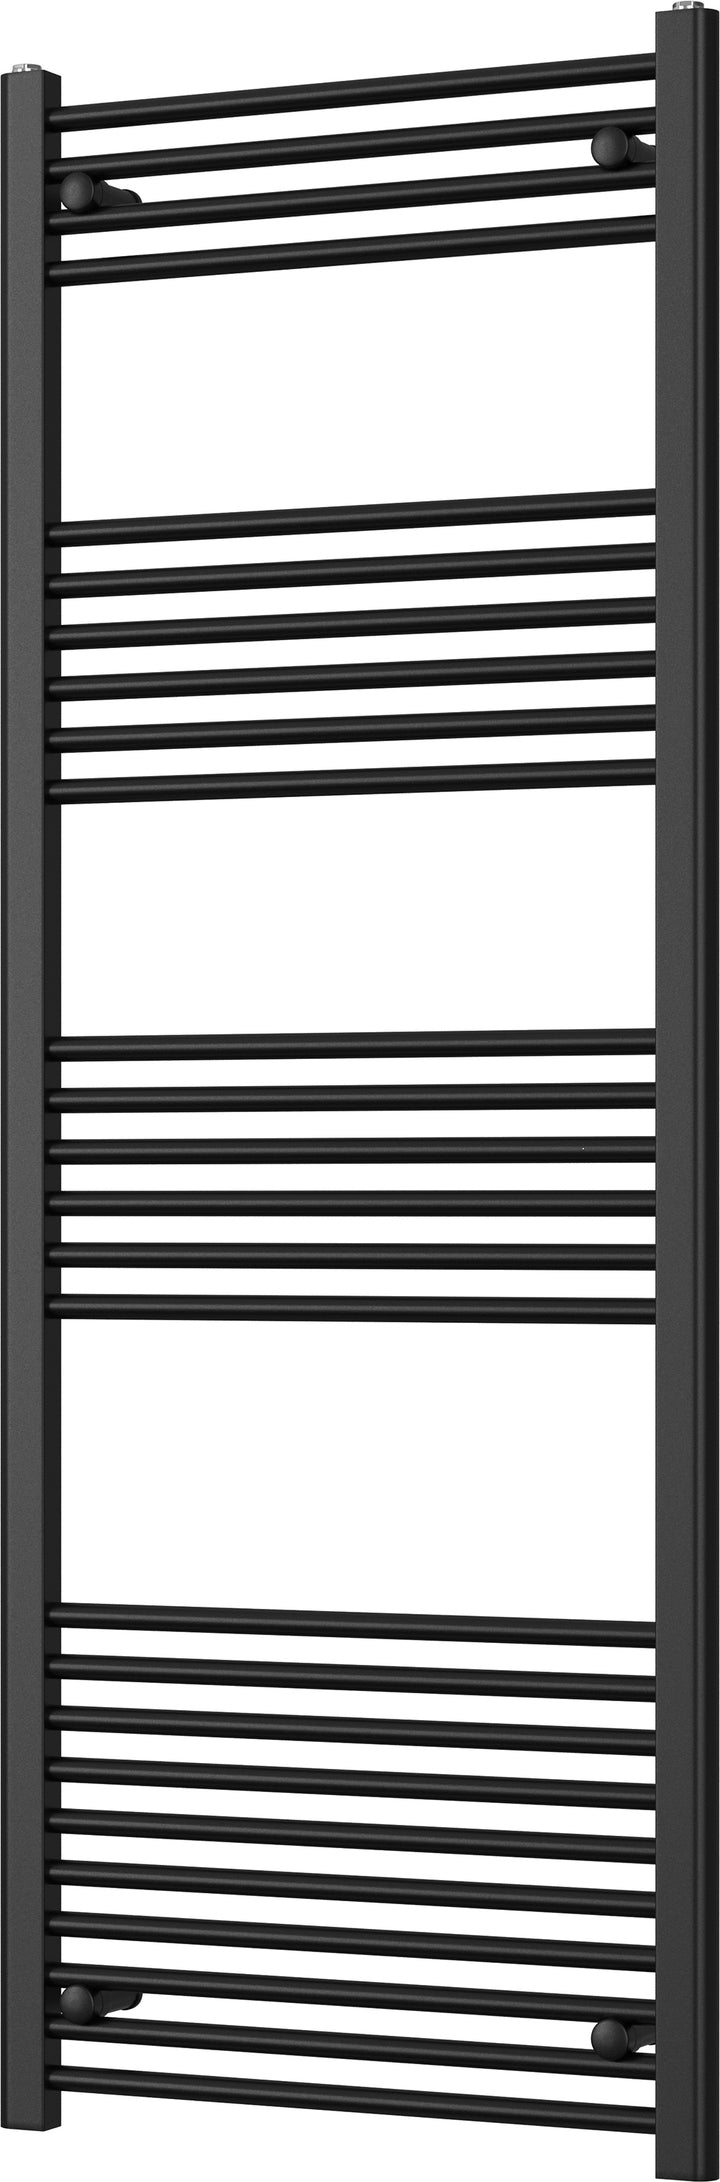 Zennor - Black Heated Towel Rail - H1600mm x W600mm - Straight